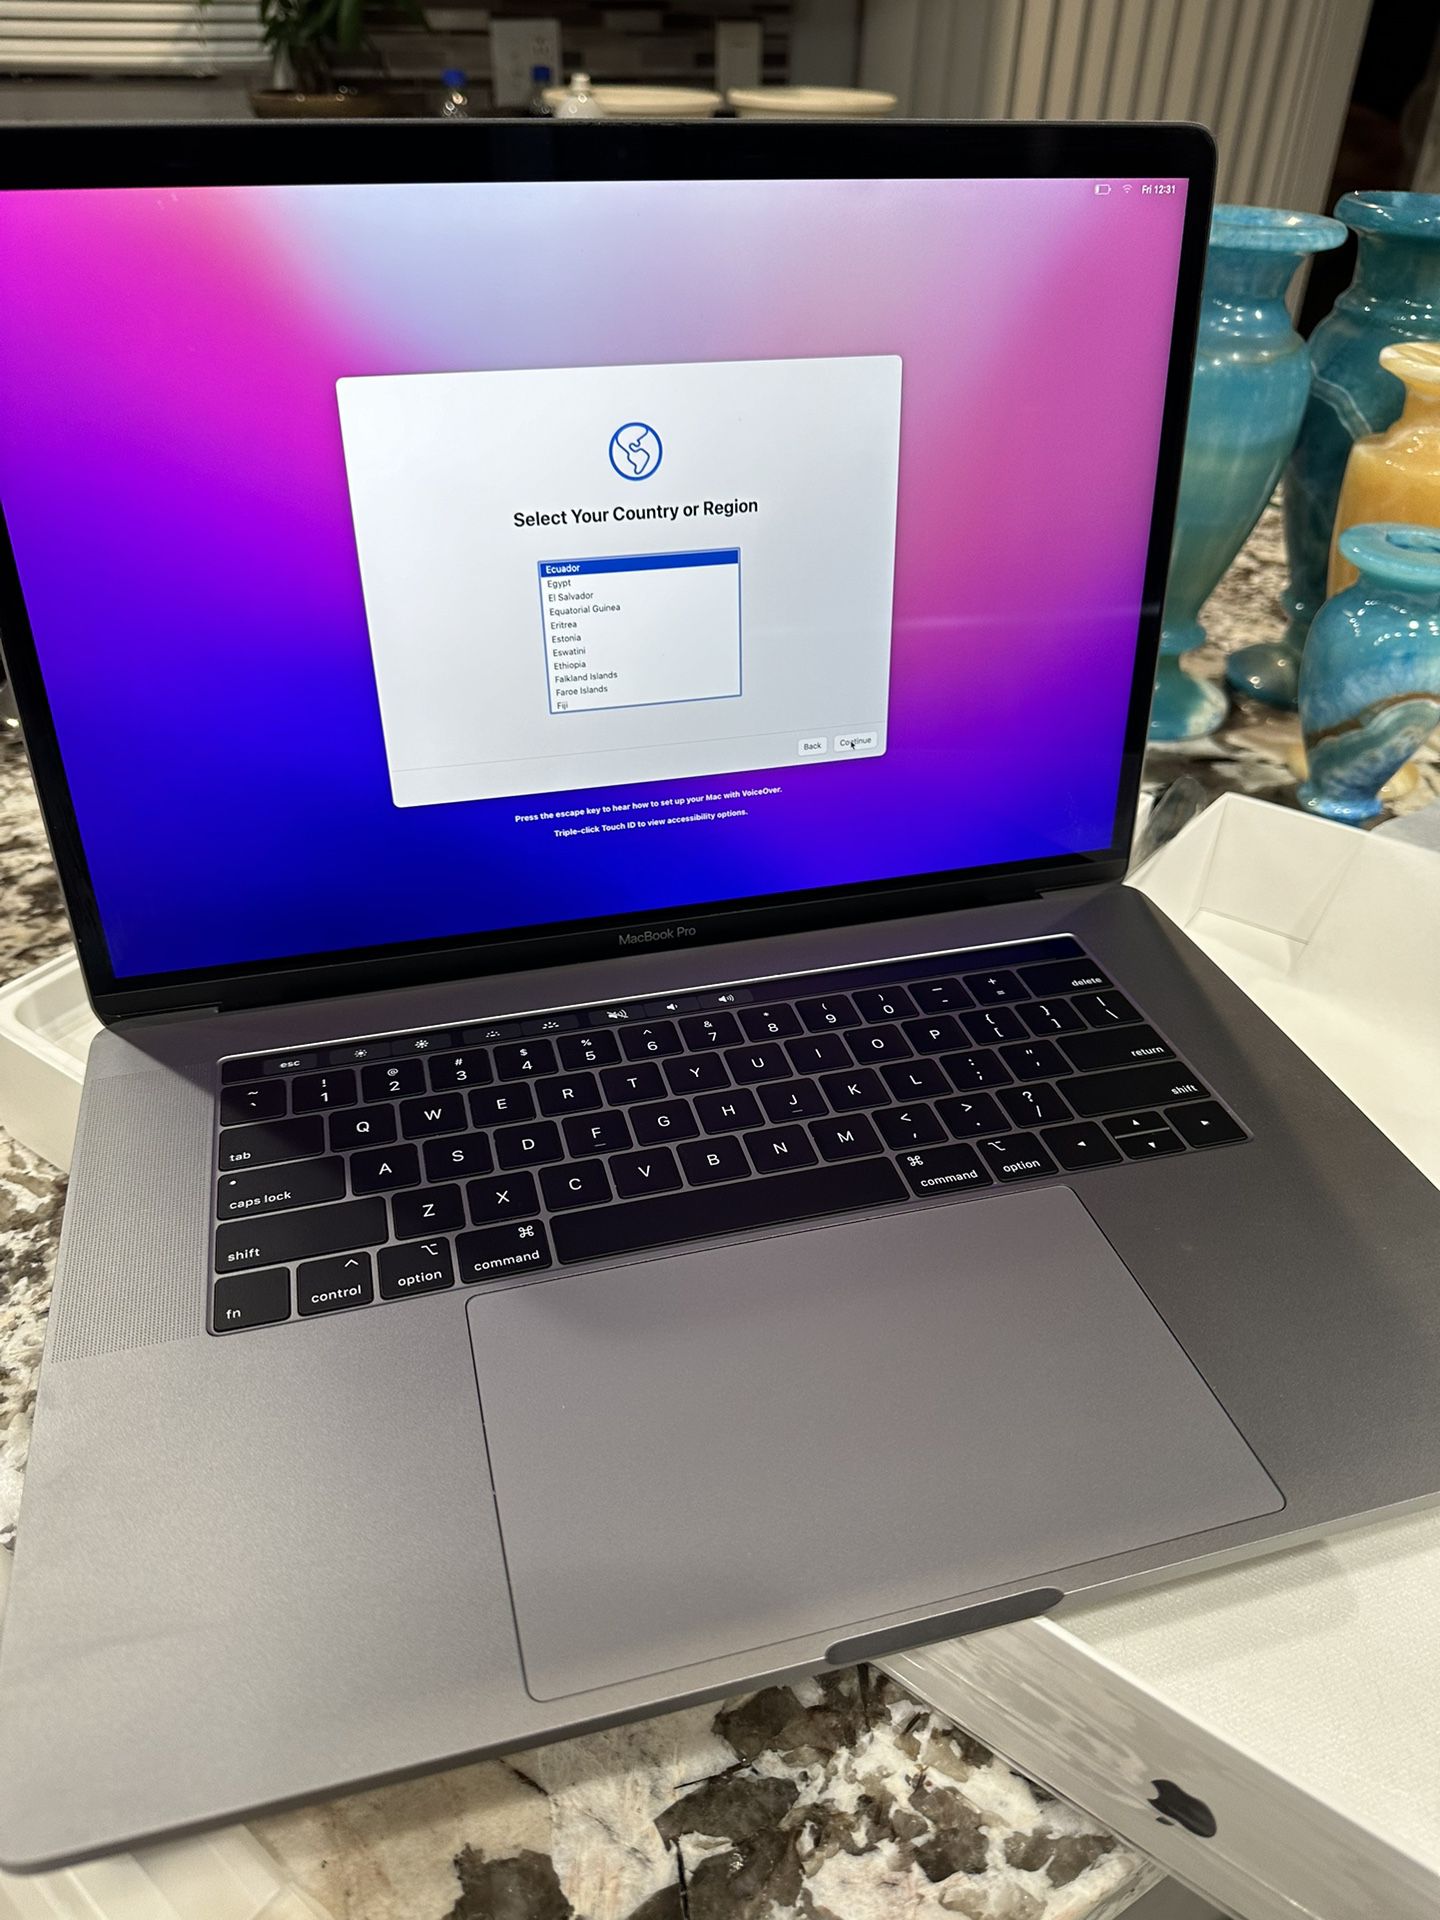 Apple MacBook Pro 15" 2019 (Intel Core i9 2.4Ghz, 32GB, 512GB, Radeon 560X) Gray